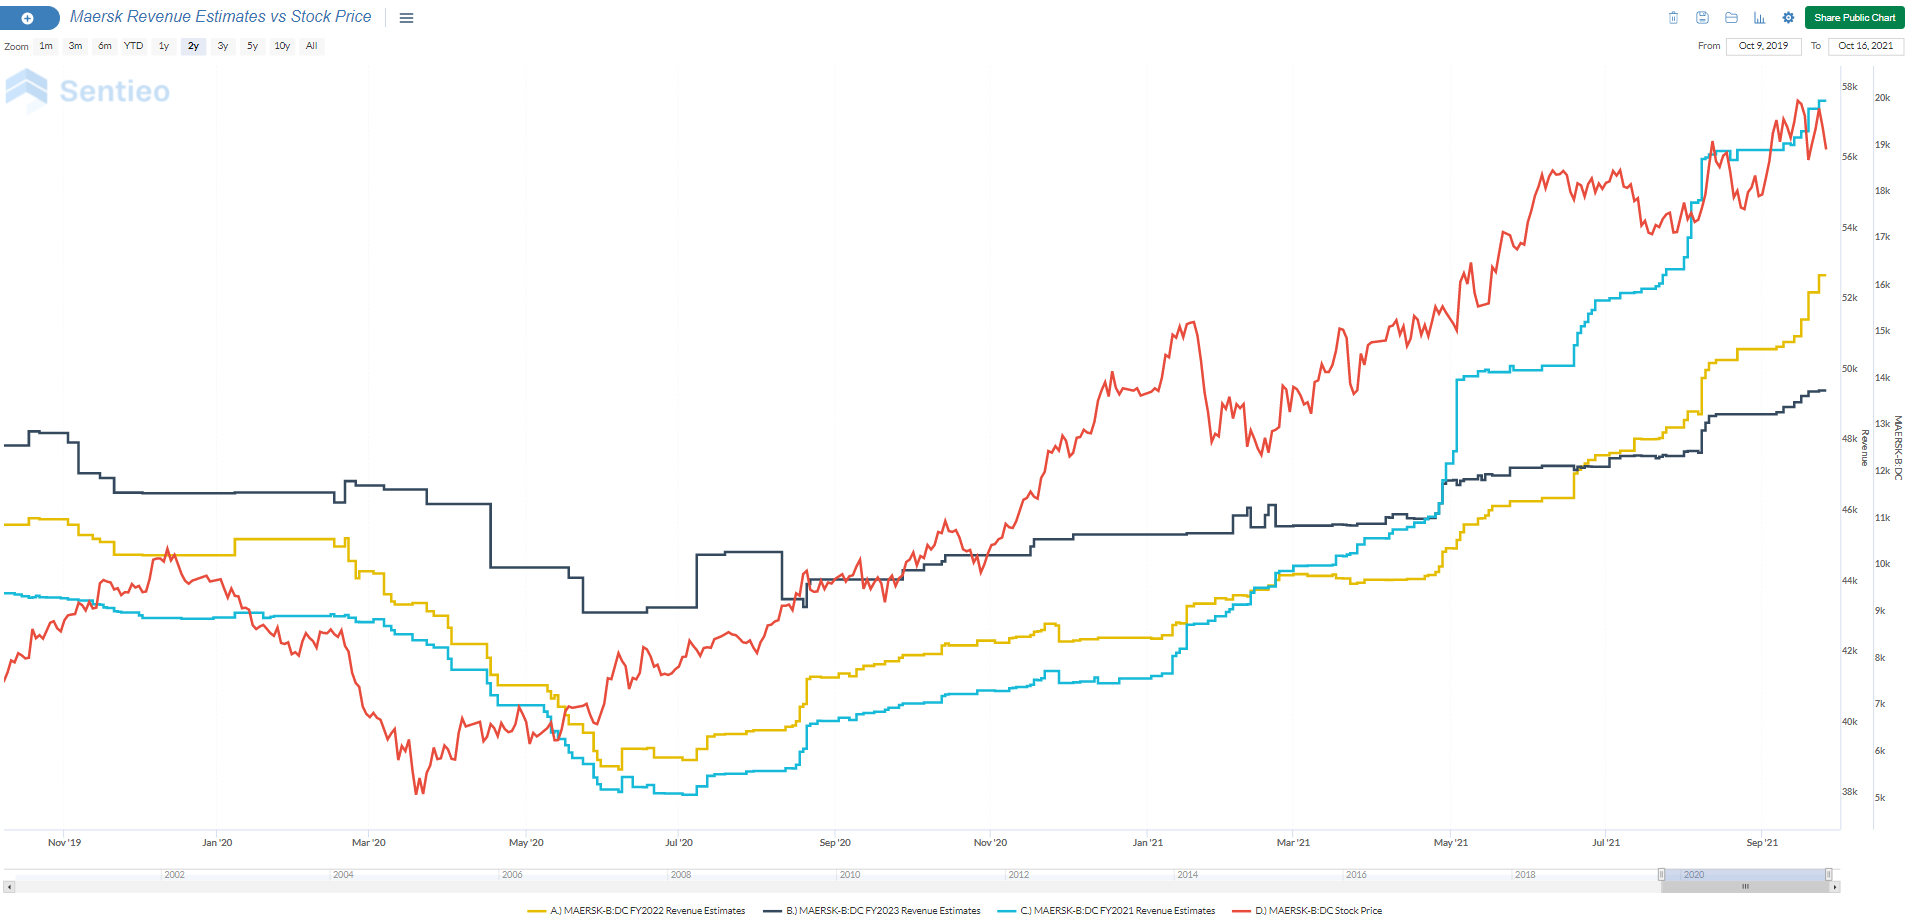 Maersk Revenue Estimates vs Stock Price chart